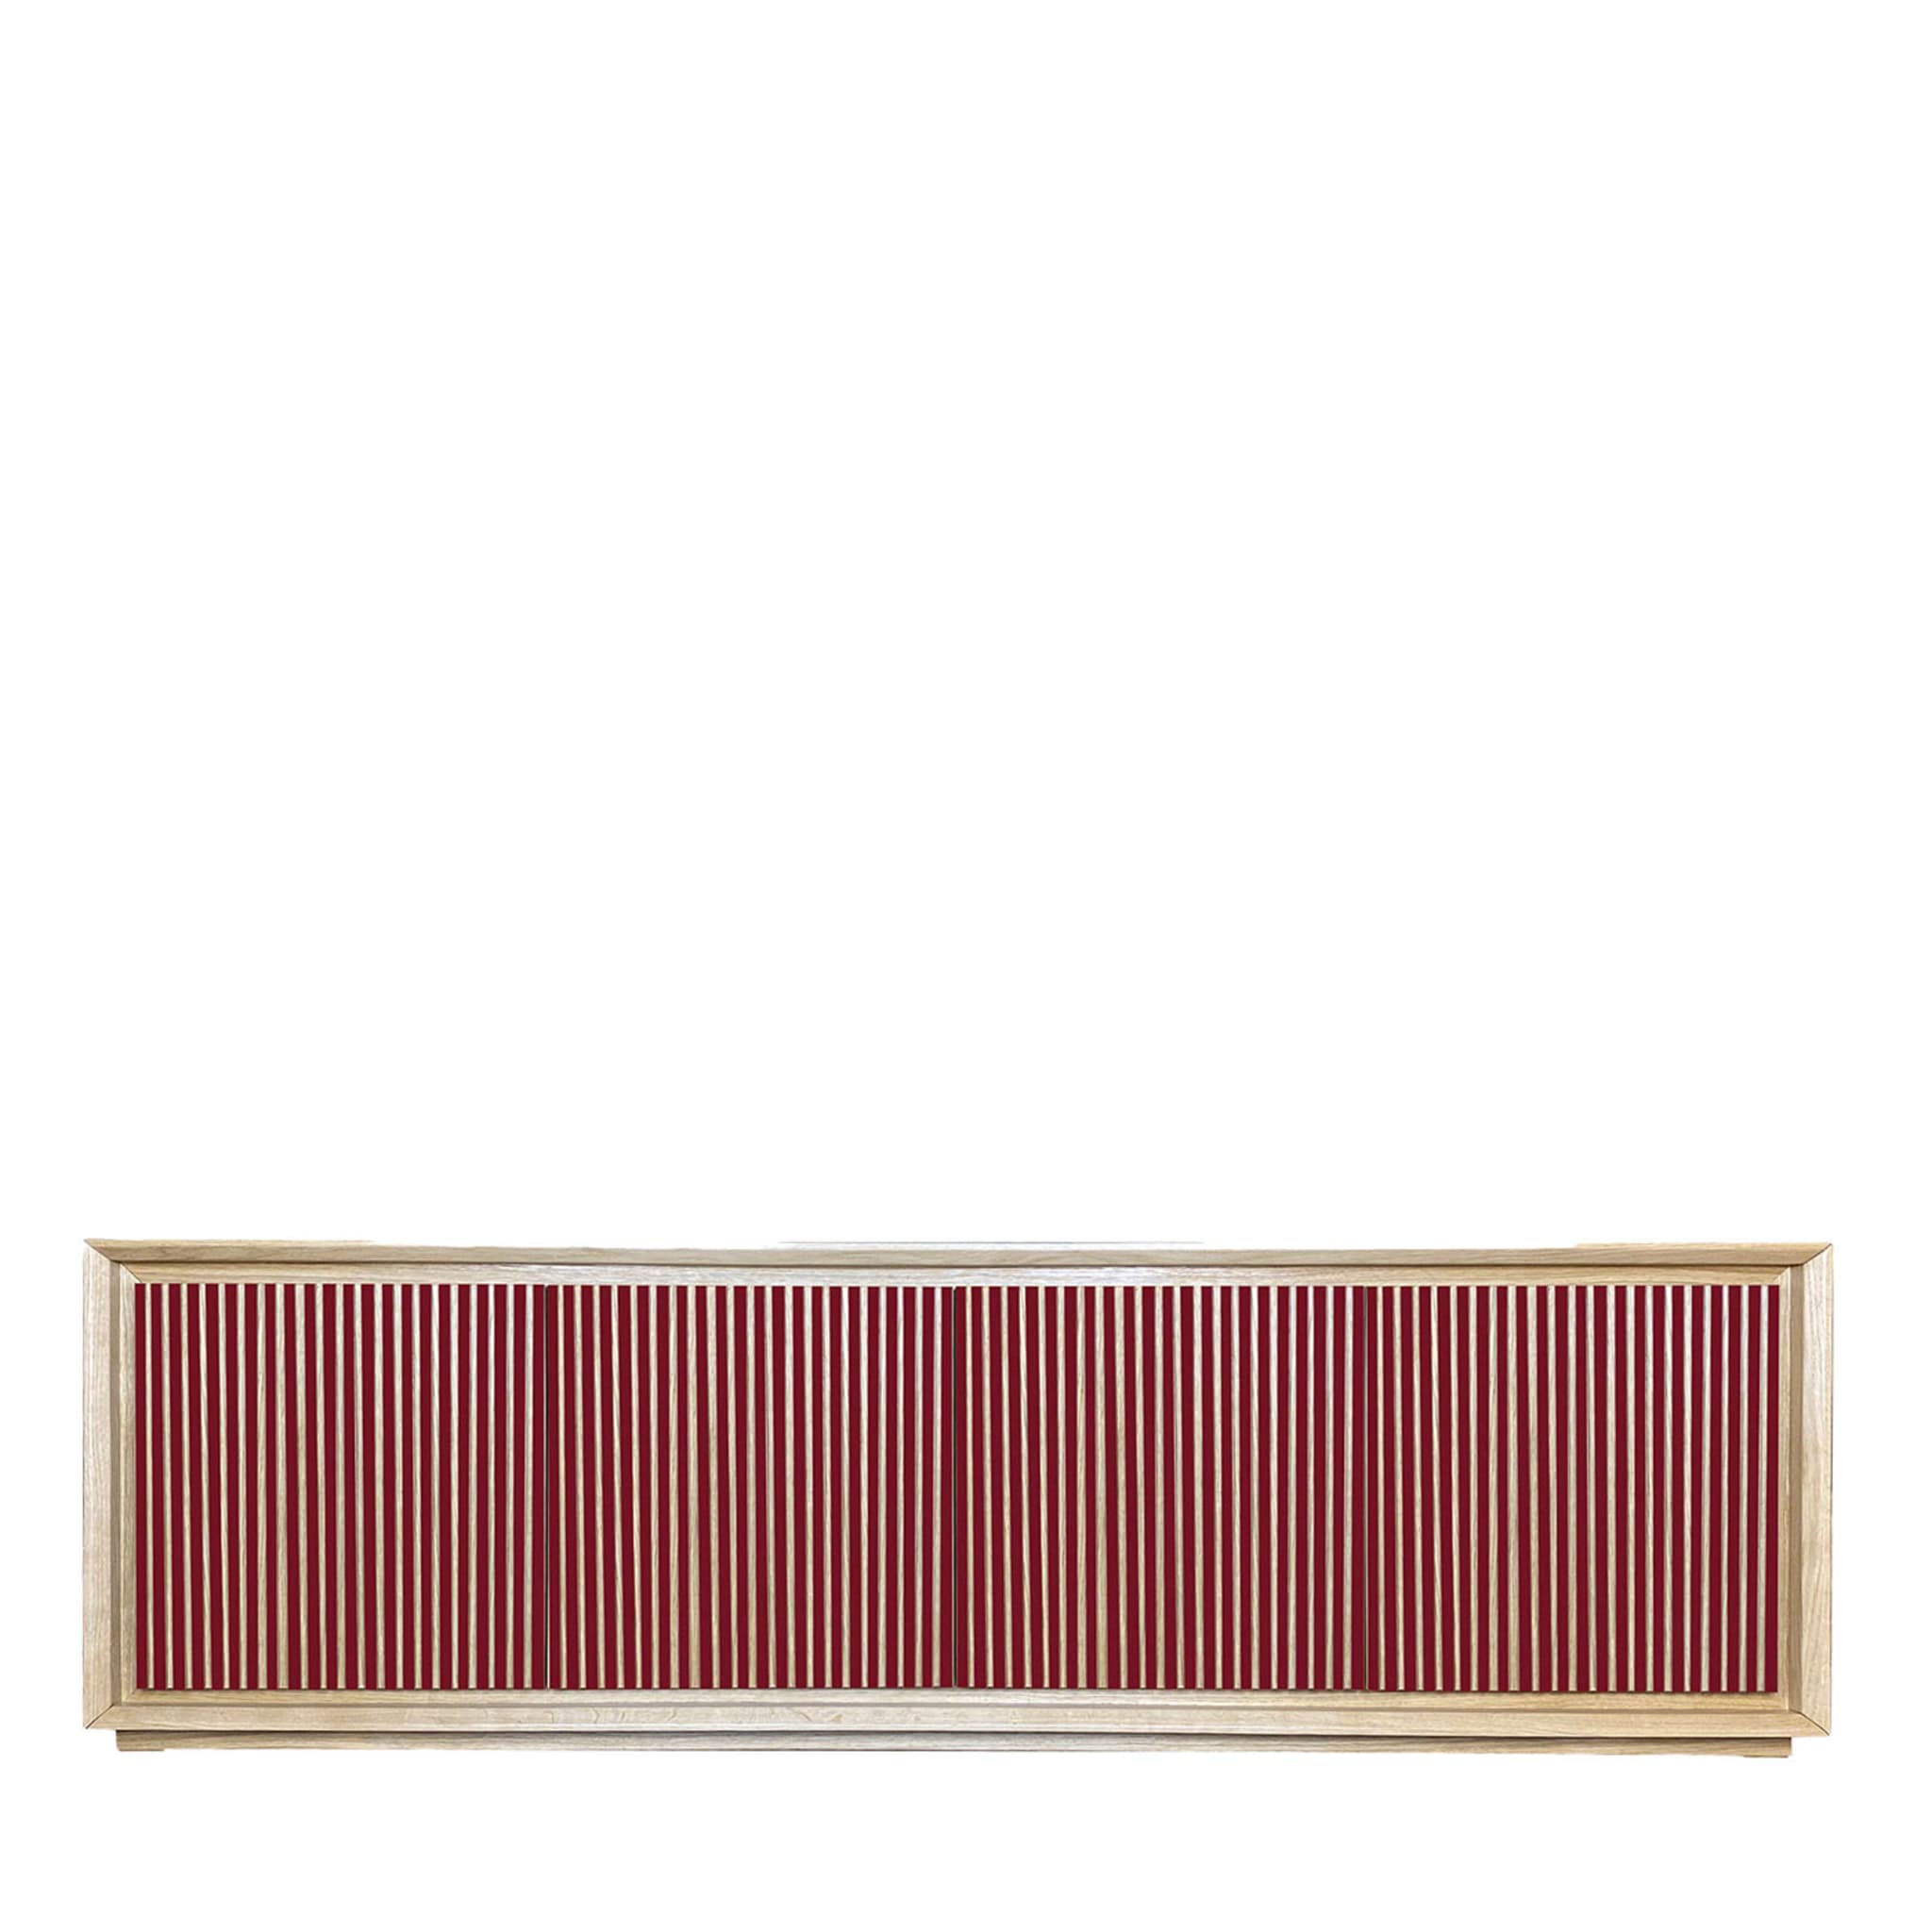 Fuga Rubino 4-türiges gerilltes rubinrotes Sideboard von Mascia Meccani - Hauptansicht